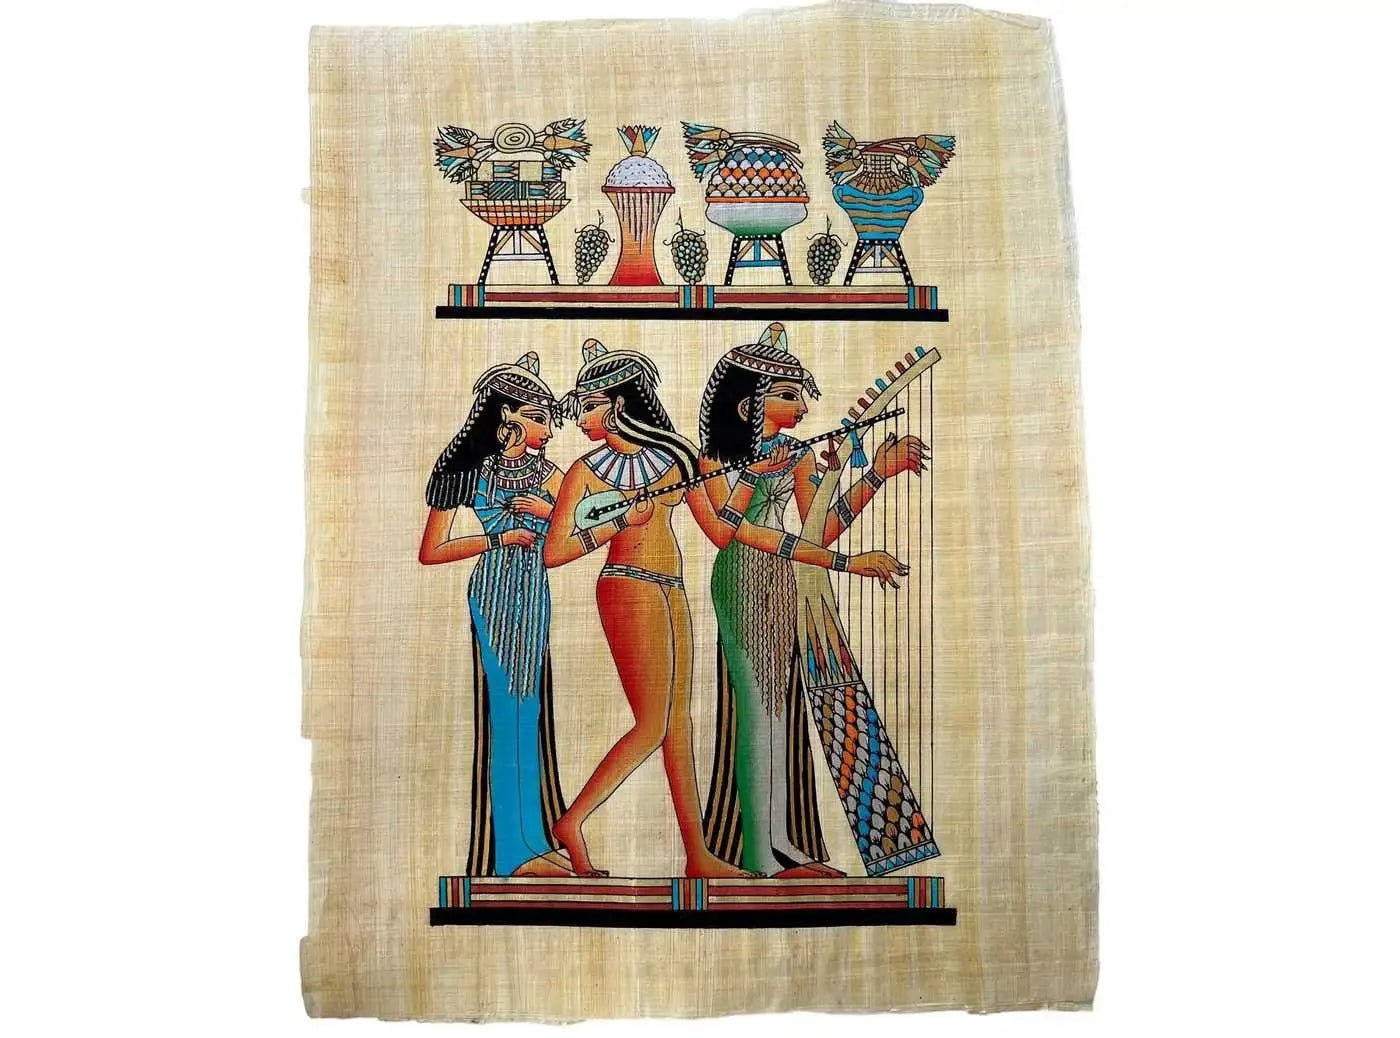 Musicians of Amun - Egypt Papyrus Painting - Authentic Papyrus Art of Ancient Egypt